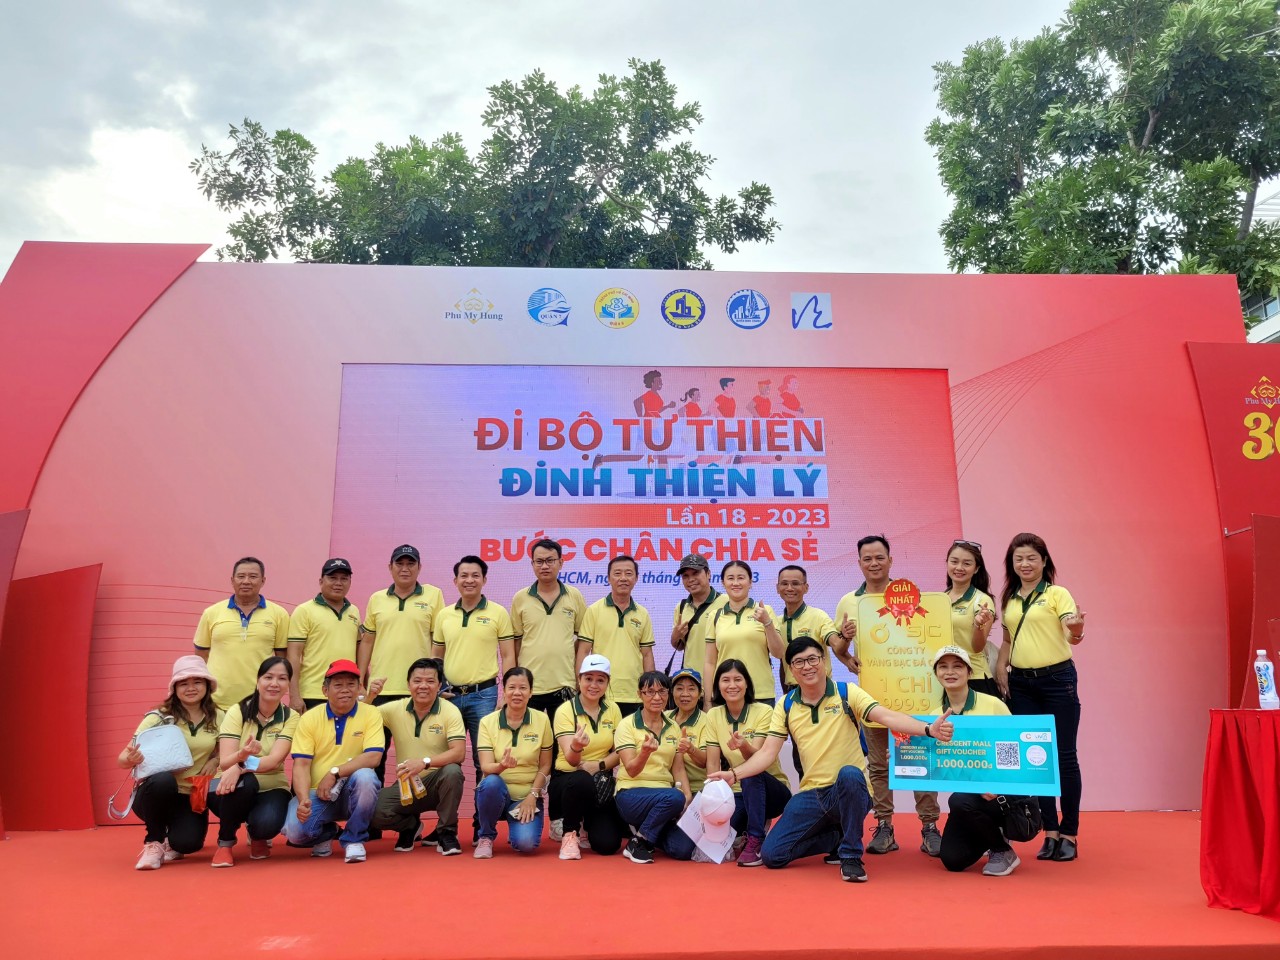 Vinataxi accompanies charity walk in HCMC